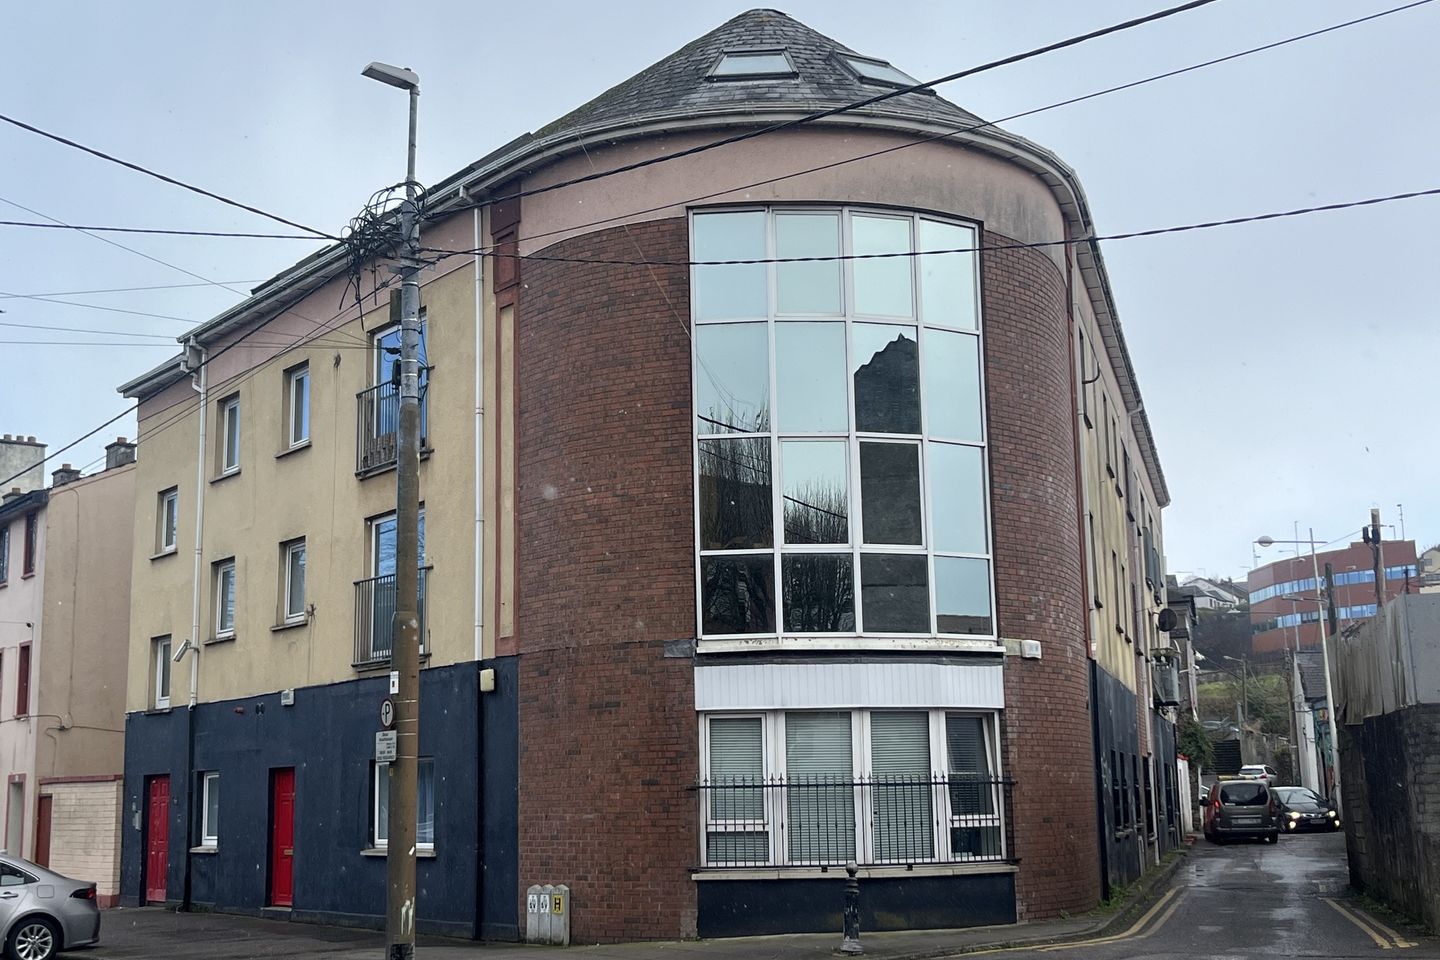 Apartment 12, Berwick House, Great William O'Brien Street, Cork City, Co. Cork, T23FP27